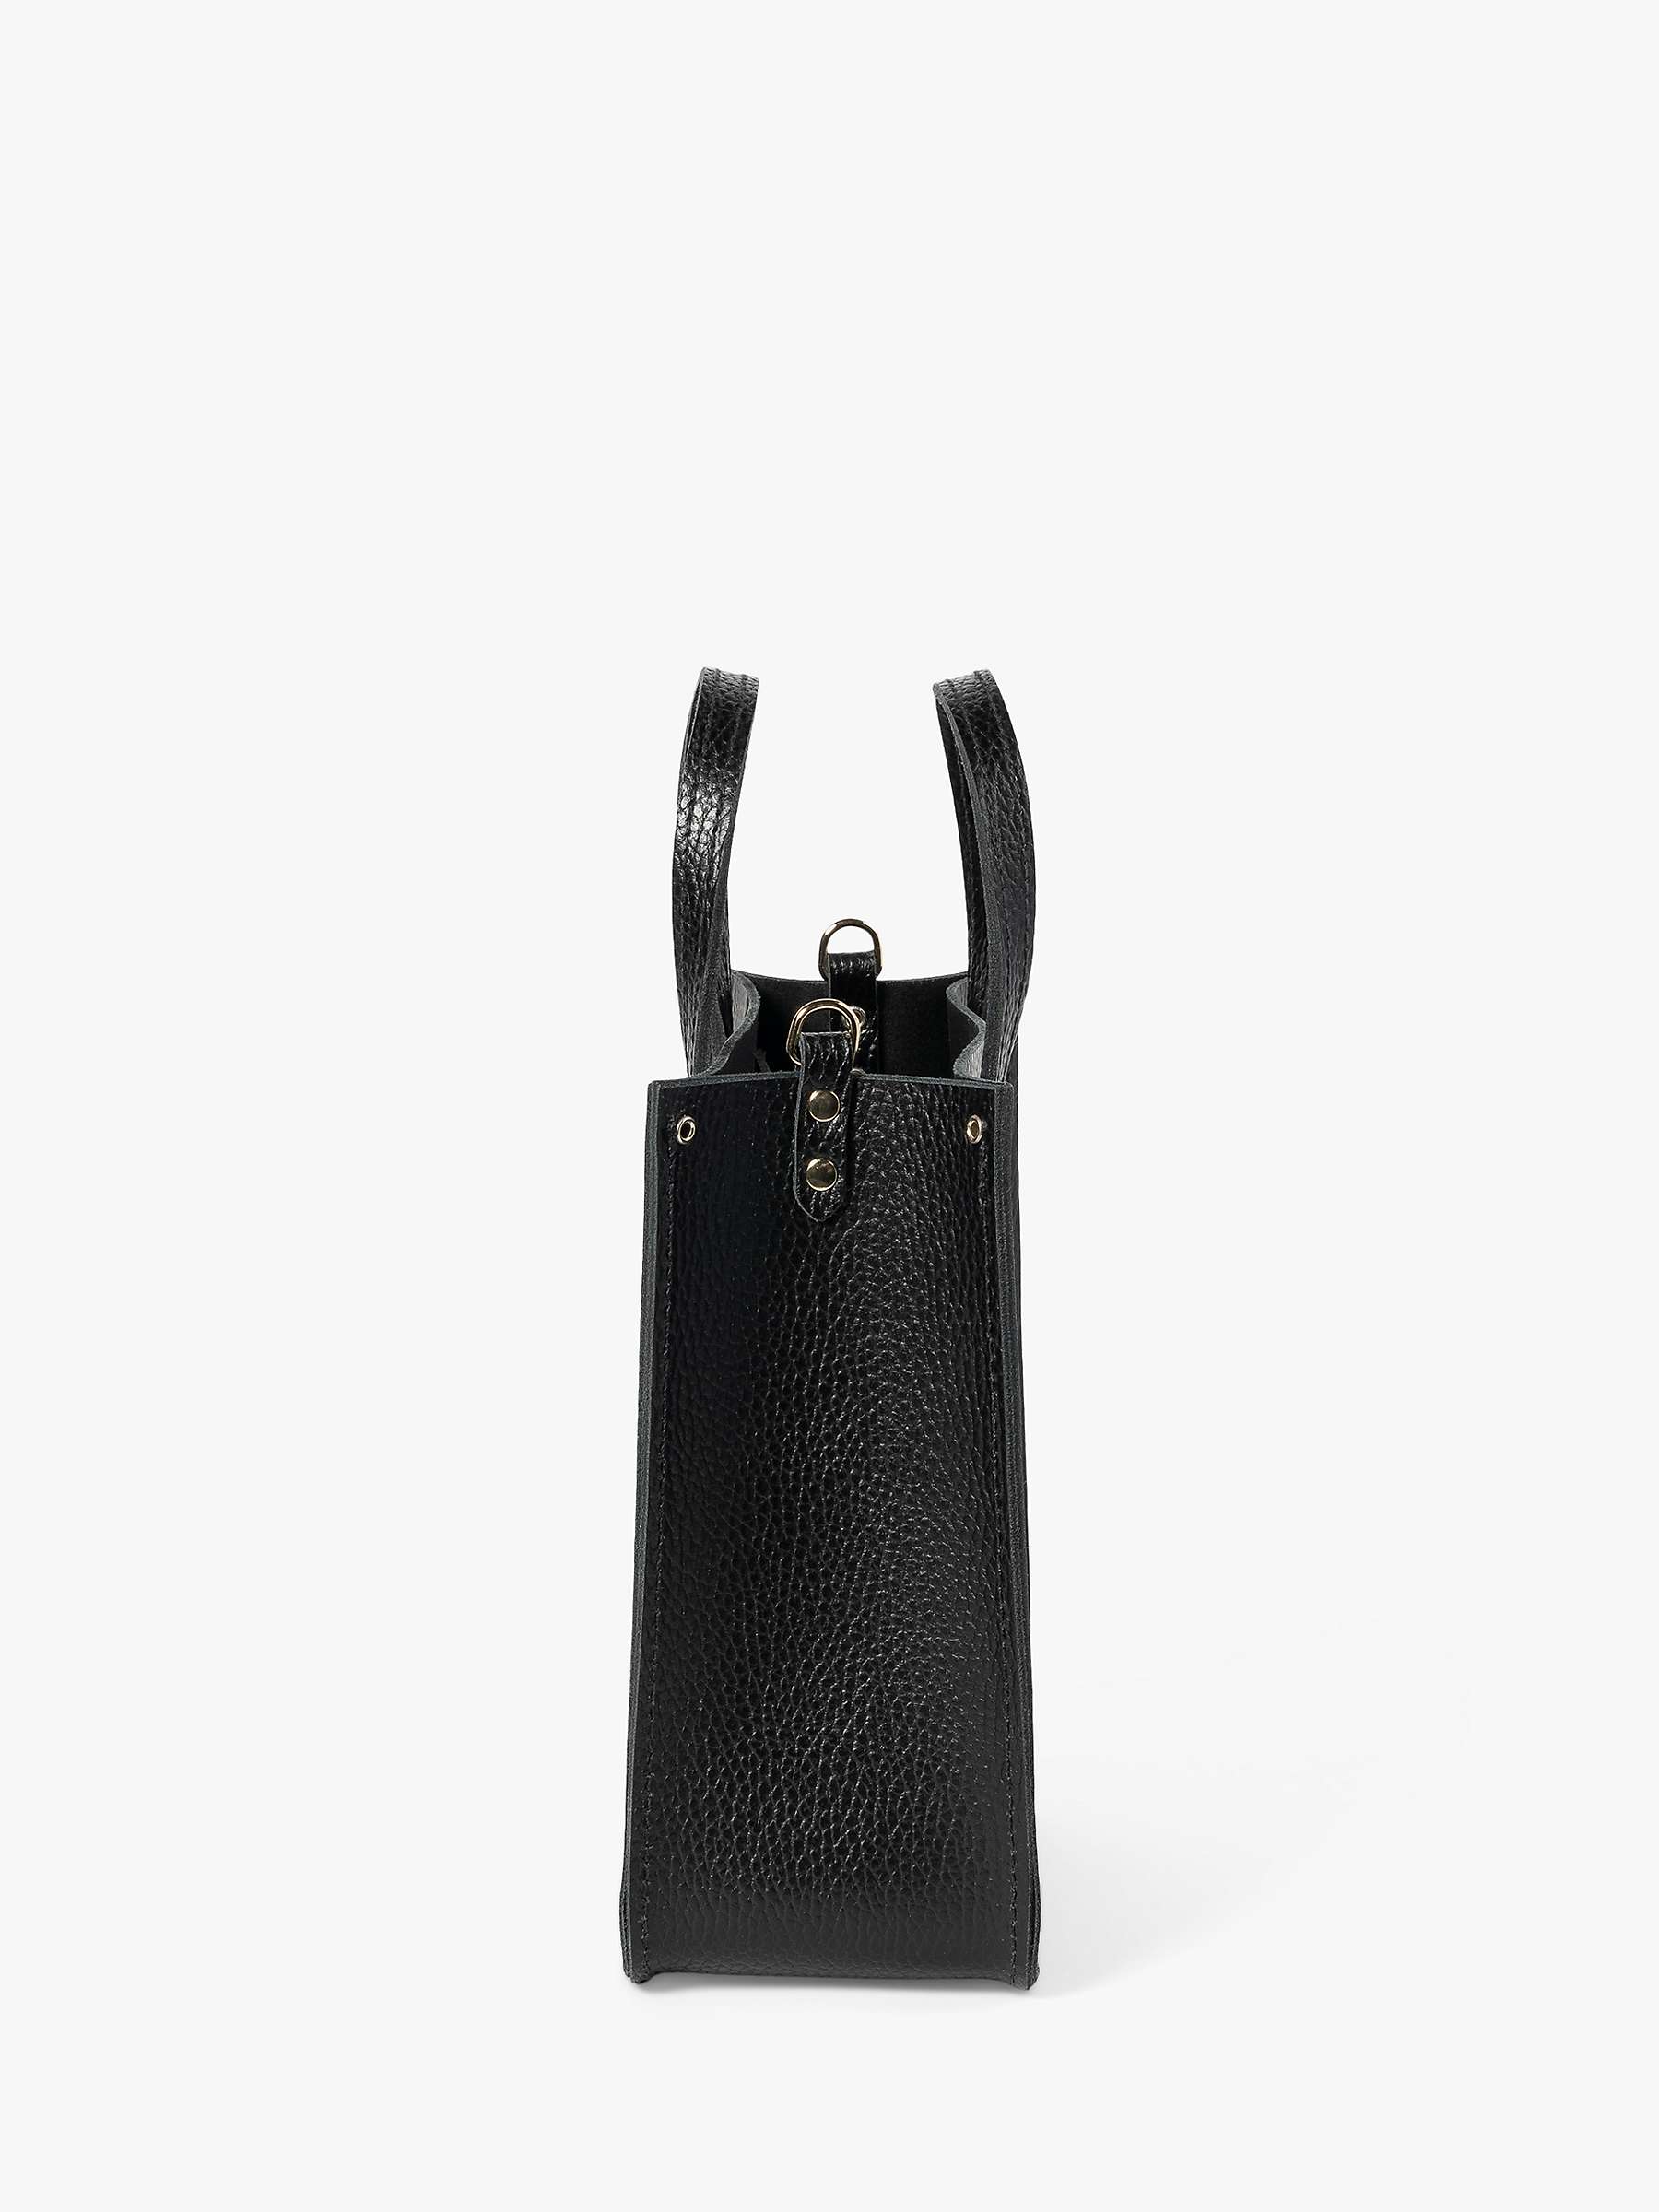 Buy Cambridge Satchel The Mini Tote Celtic Grain Leather Bag Online at johnlewis.com